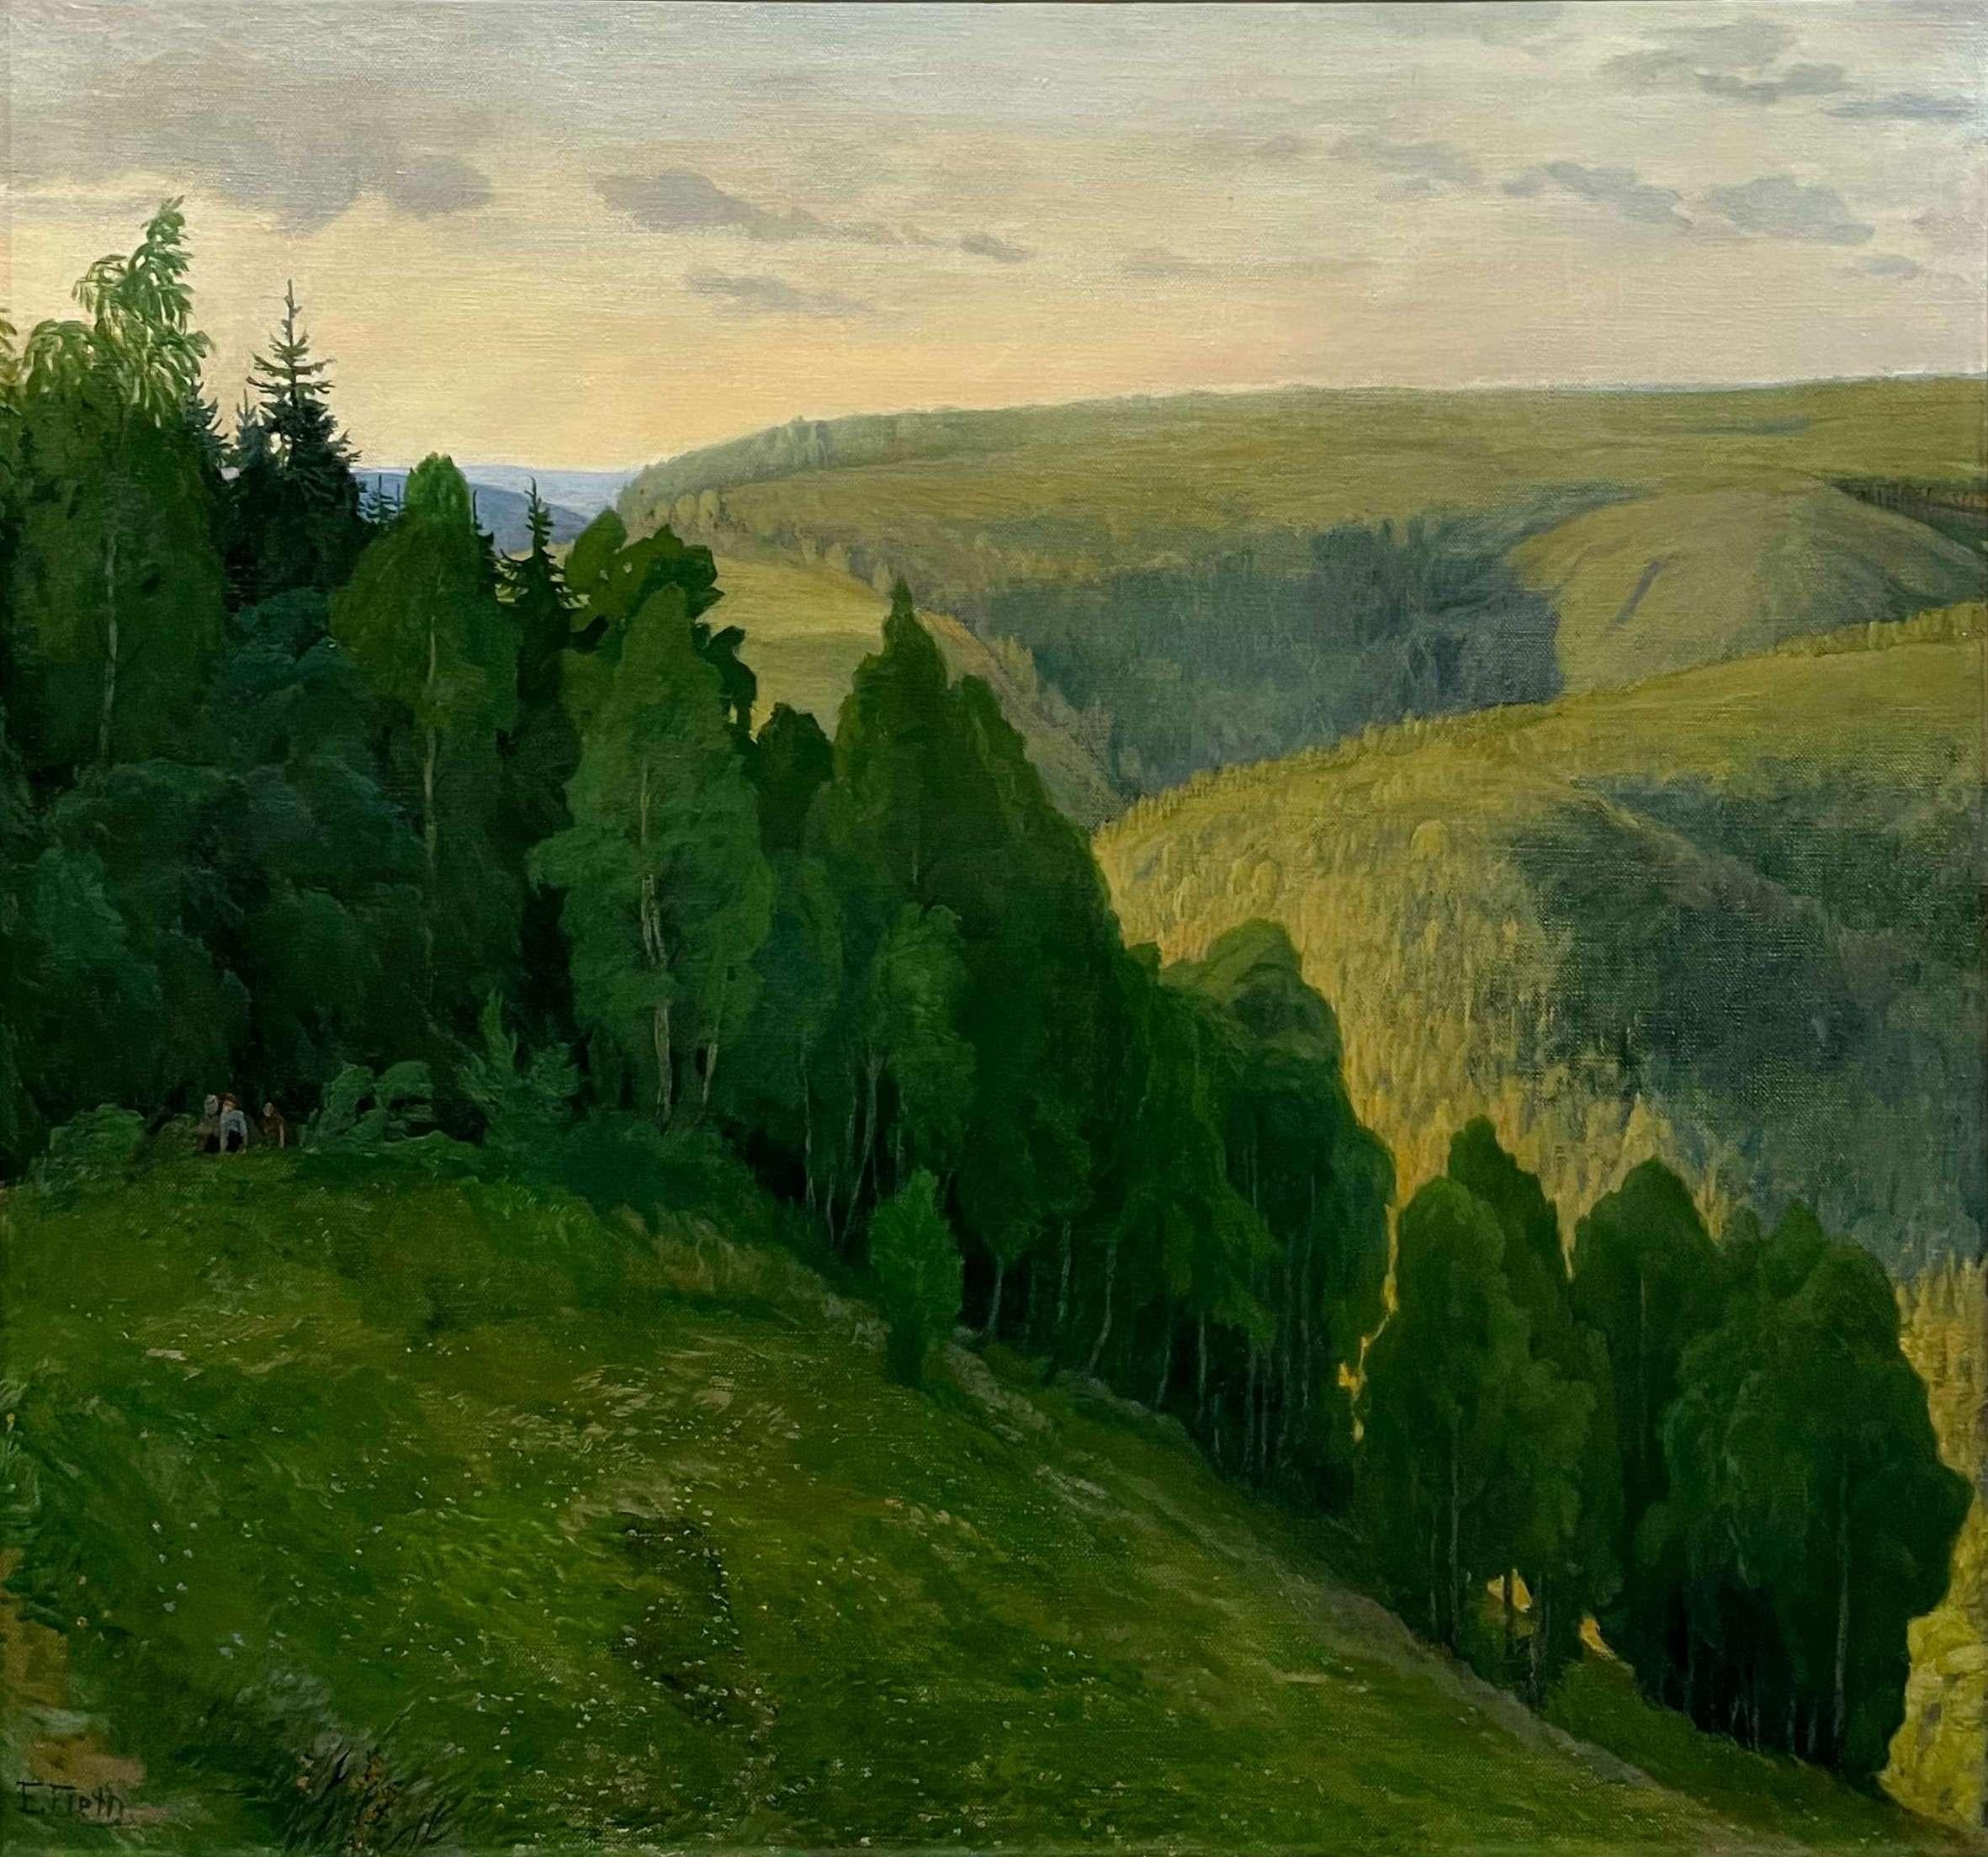 Unknown Landscape Painting – Schöne europäische Landschaft/Brunnenlandschaft des europäischen Künstlers E. Feith